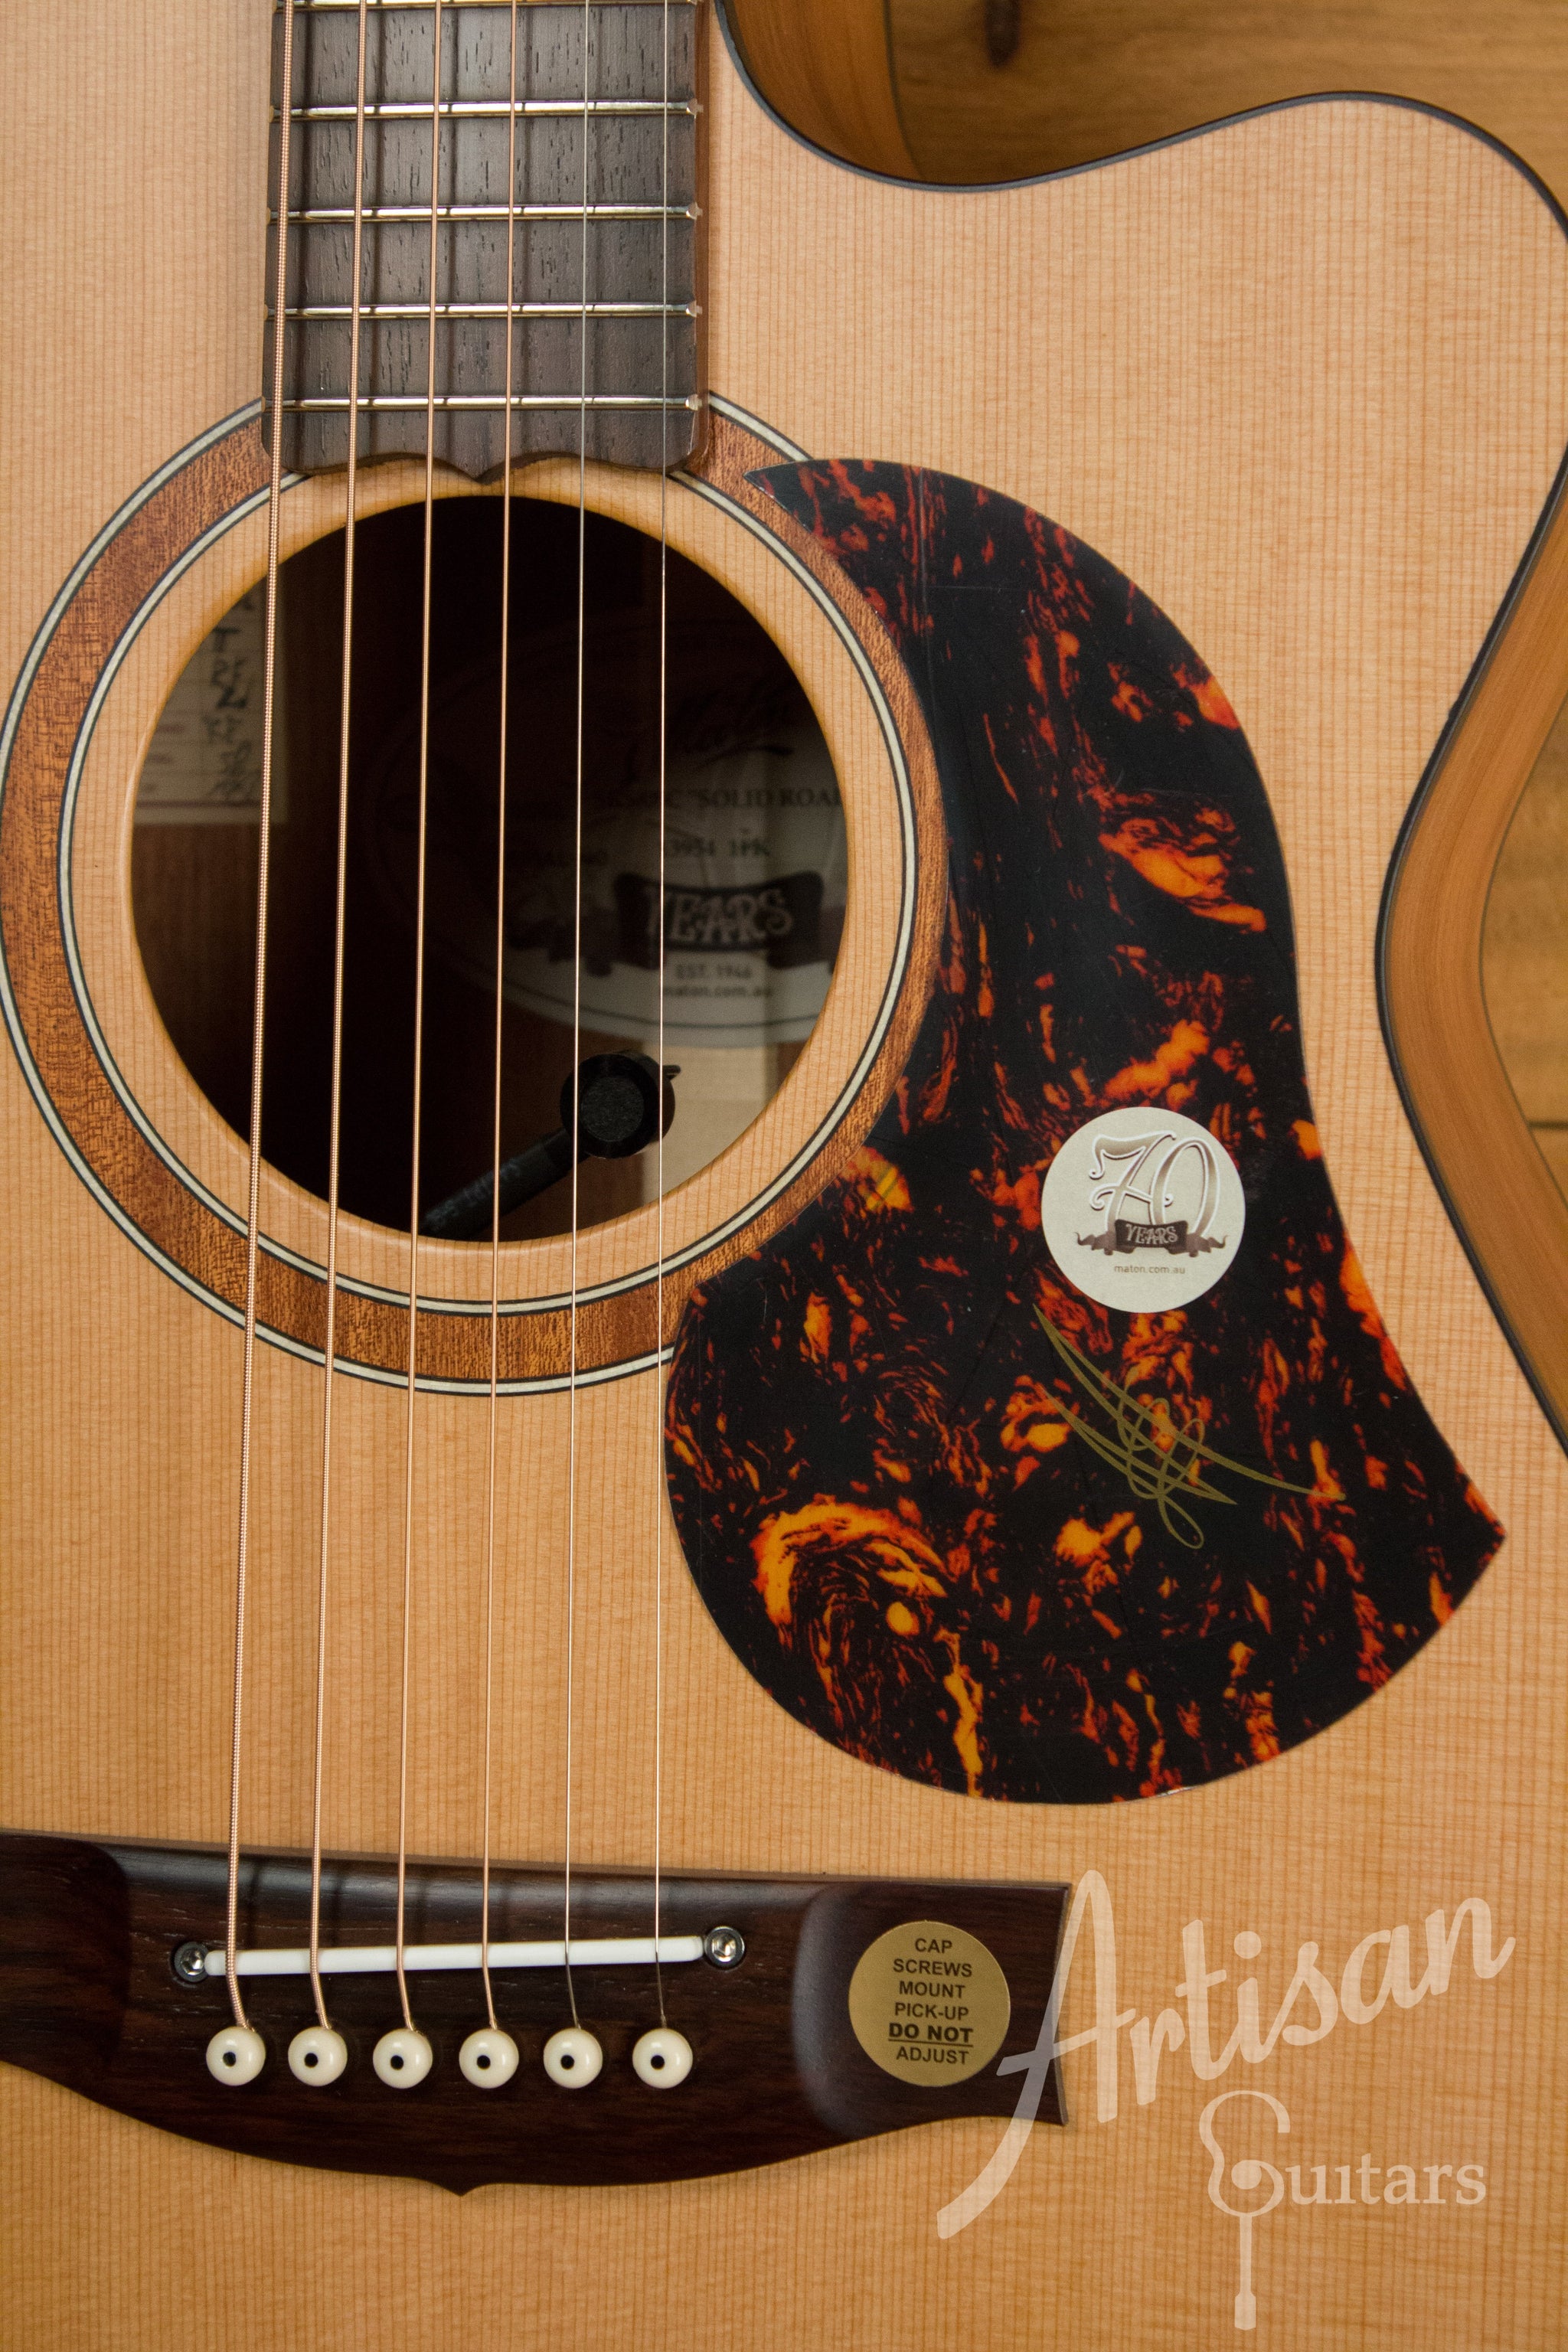 Maton SRS808C Guitar Western Red Cedar and Solid Blackwood Cutaway ID-11207 - Artisan Guitars